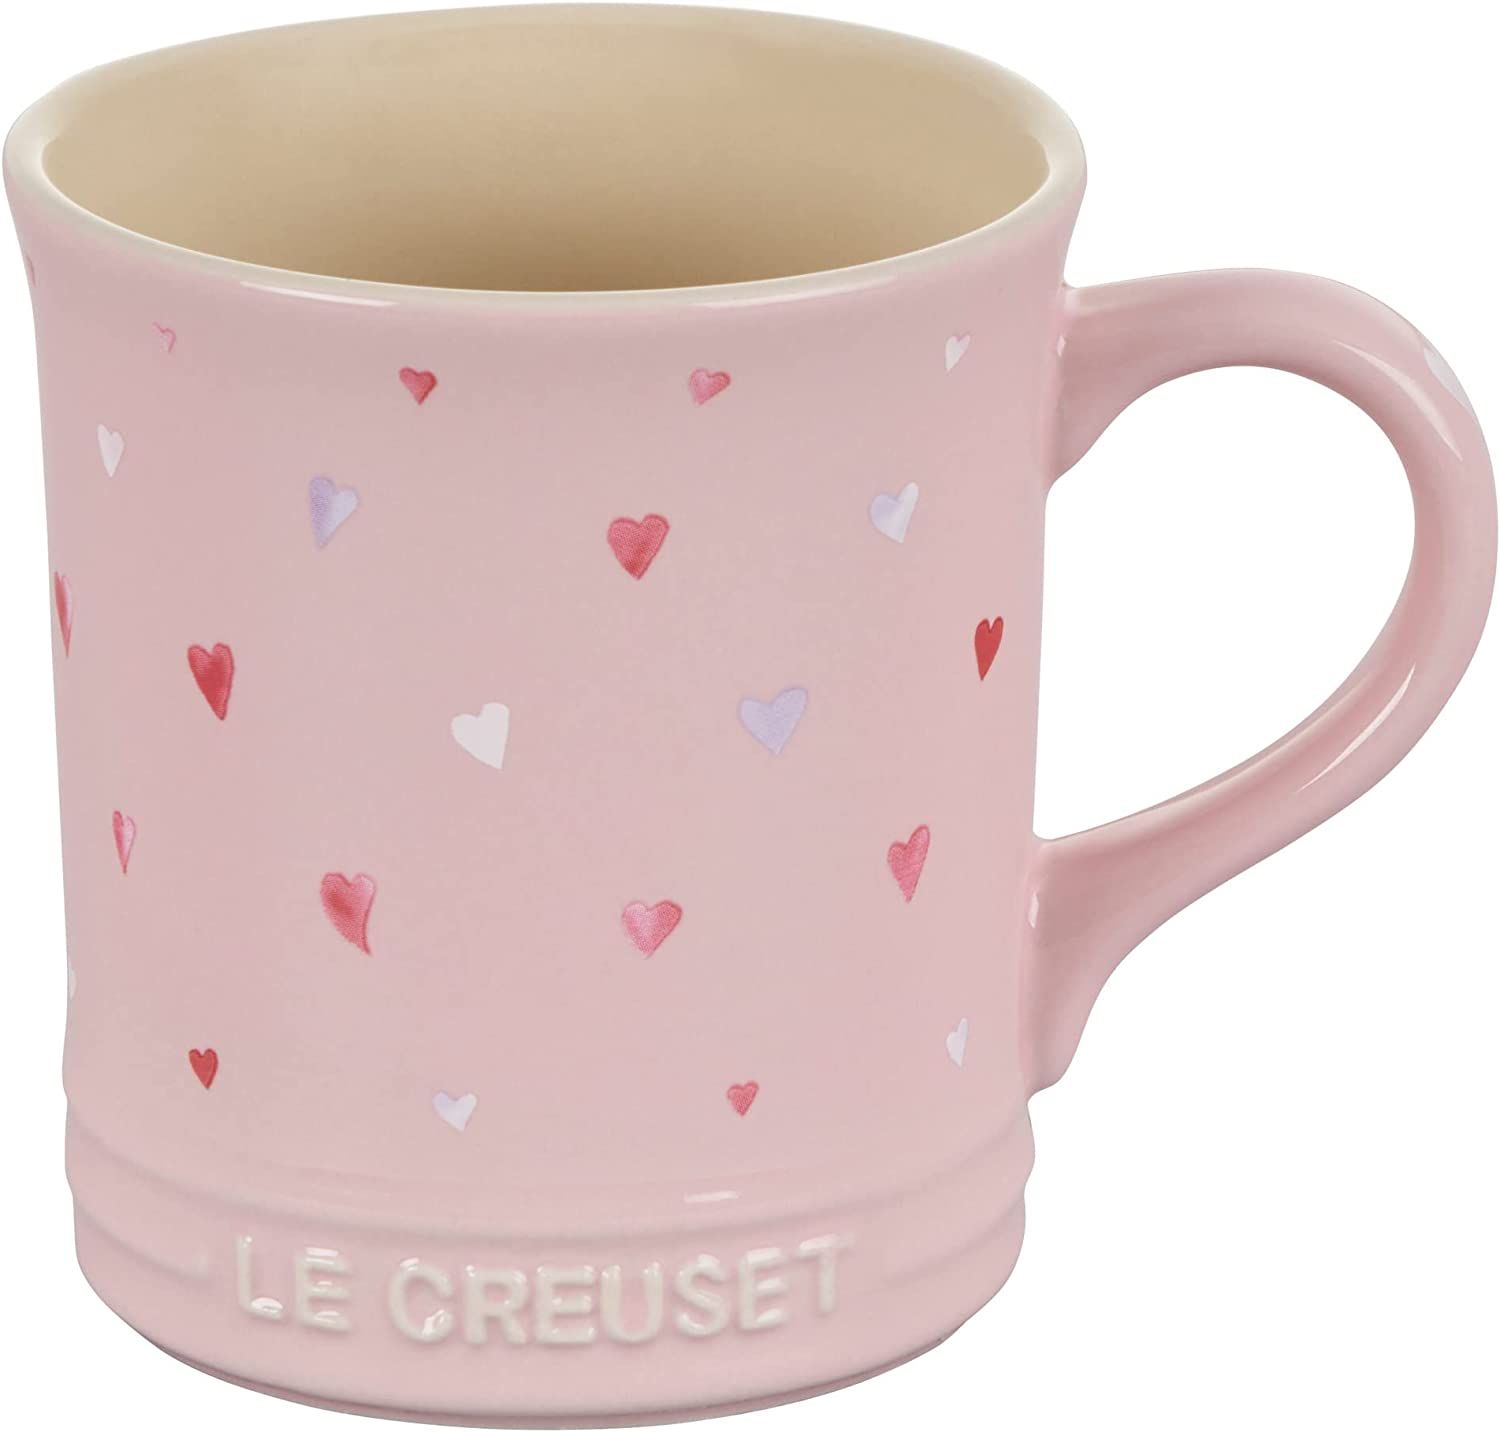 Le Creuset L'Amour Collection Stoneware 14oz Mug, Chiffon Pink with Heart Applique | Amazon (US)